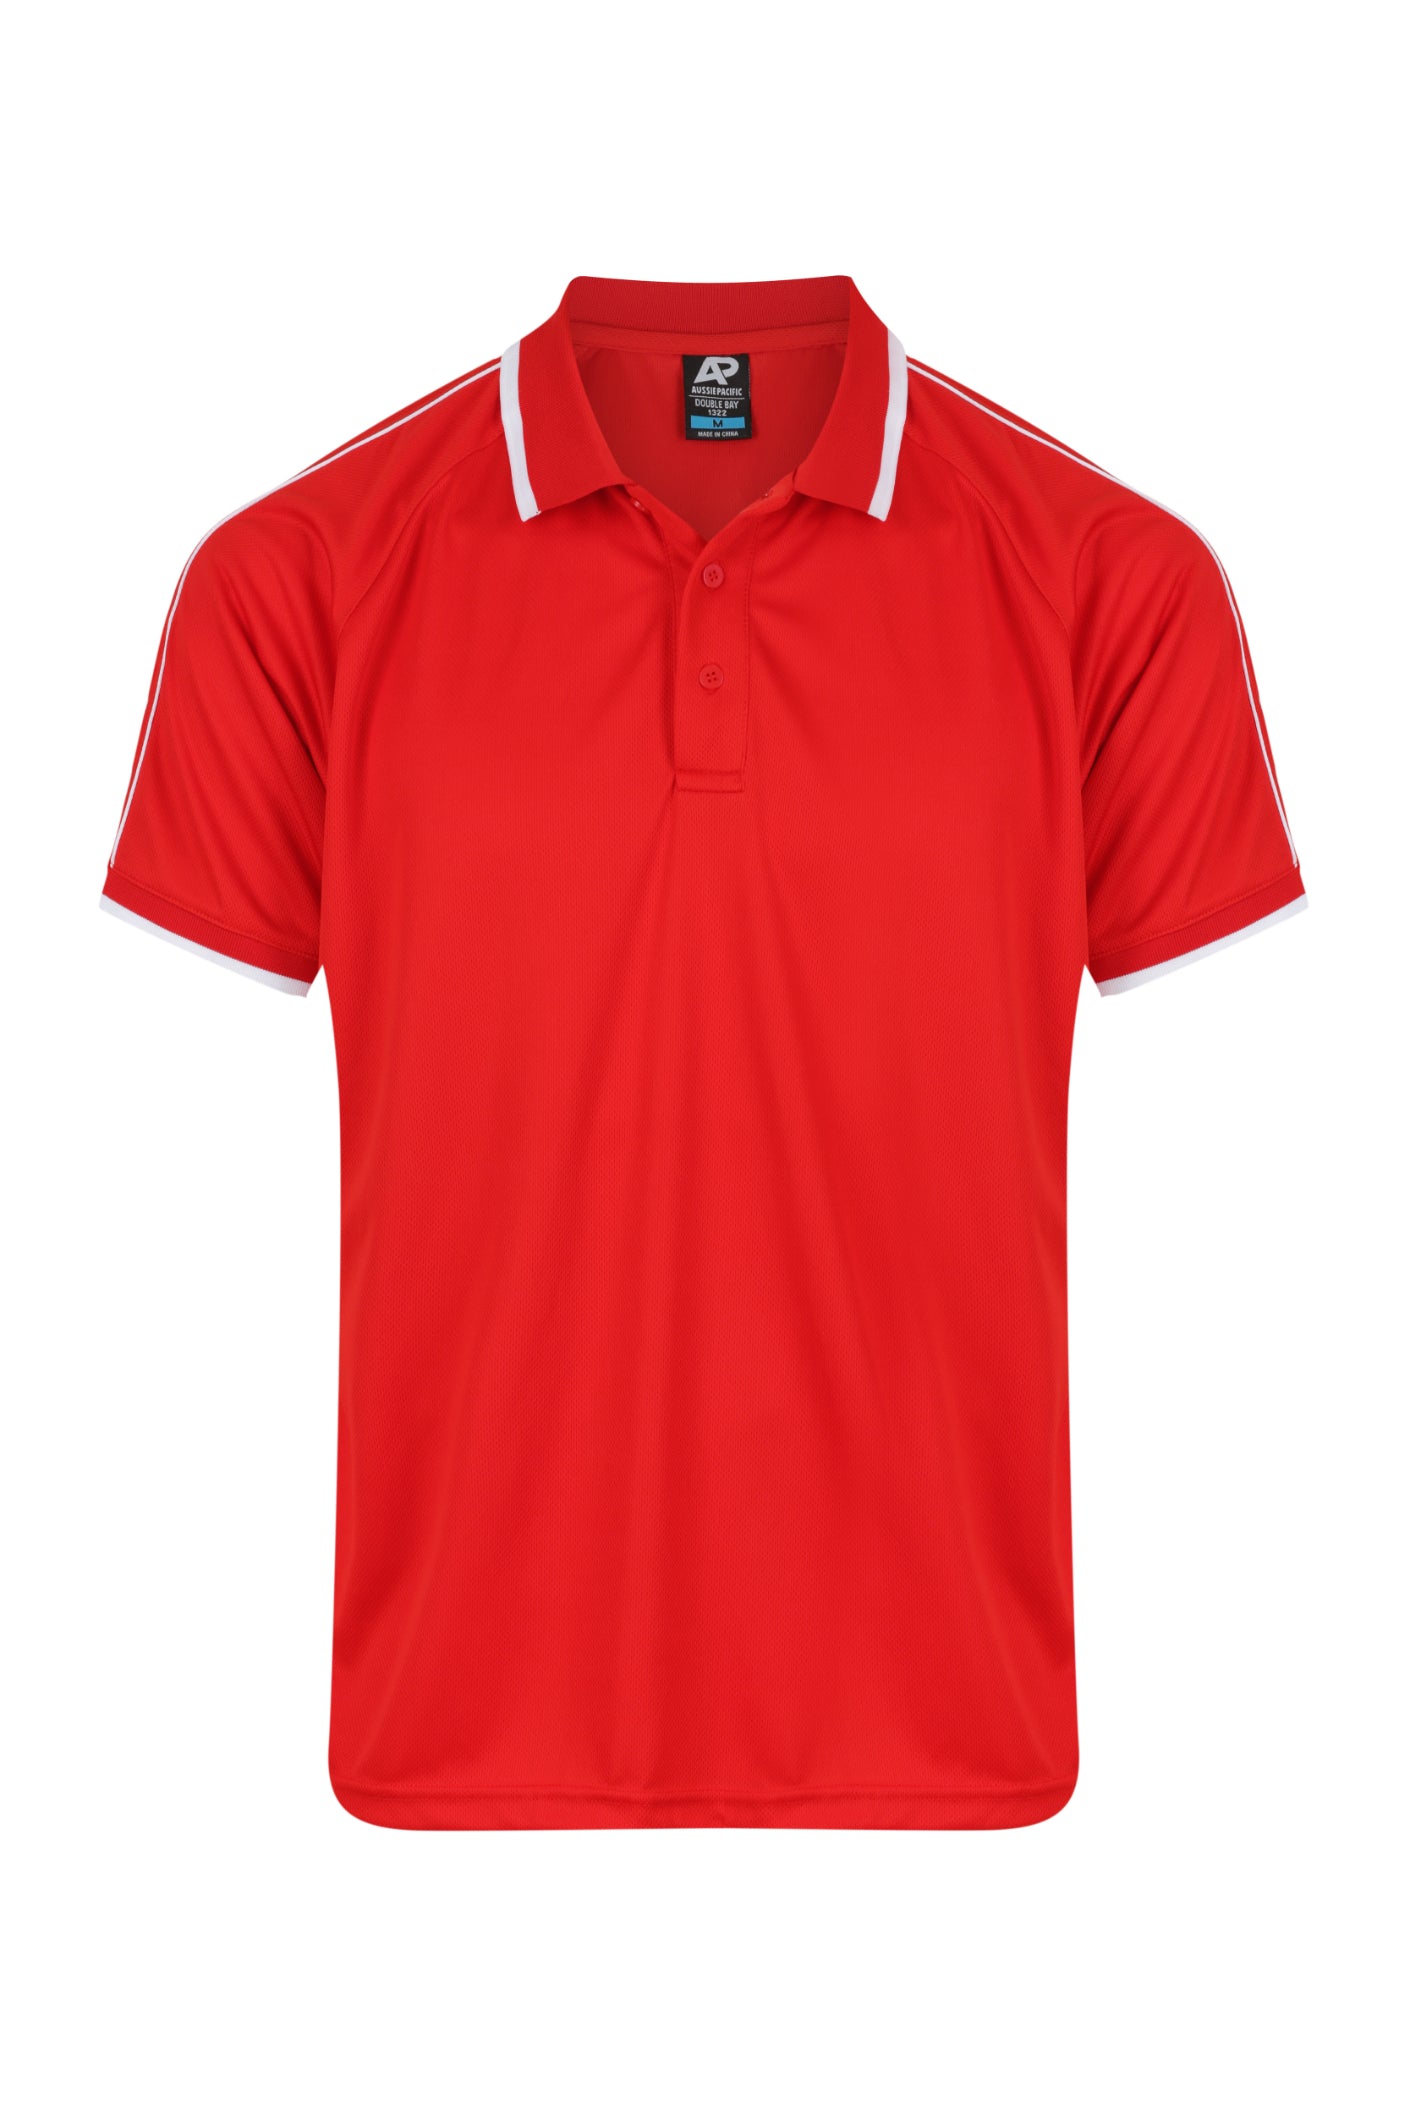 Custom Double Bay Uniform Polo Shirts - Red/White